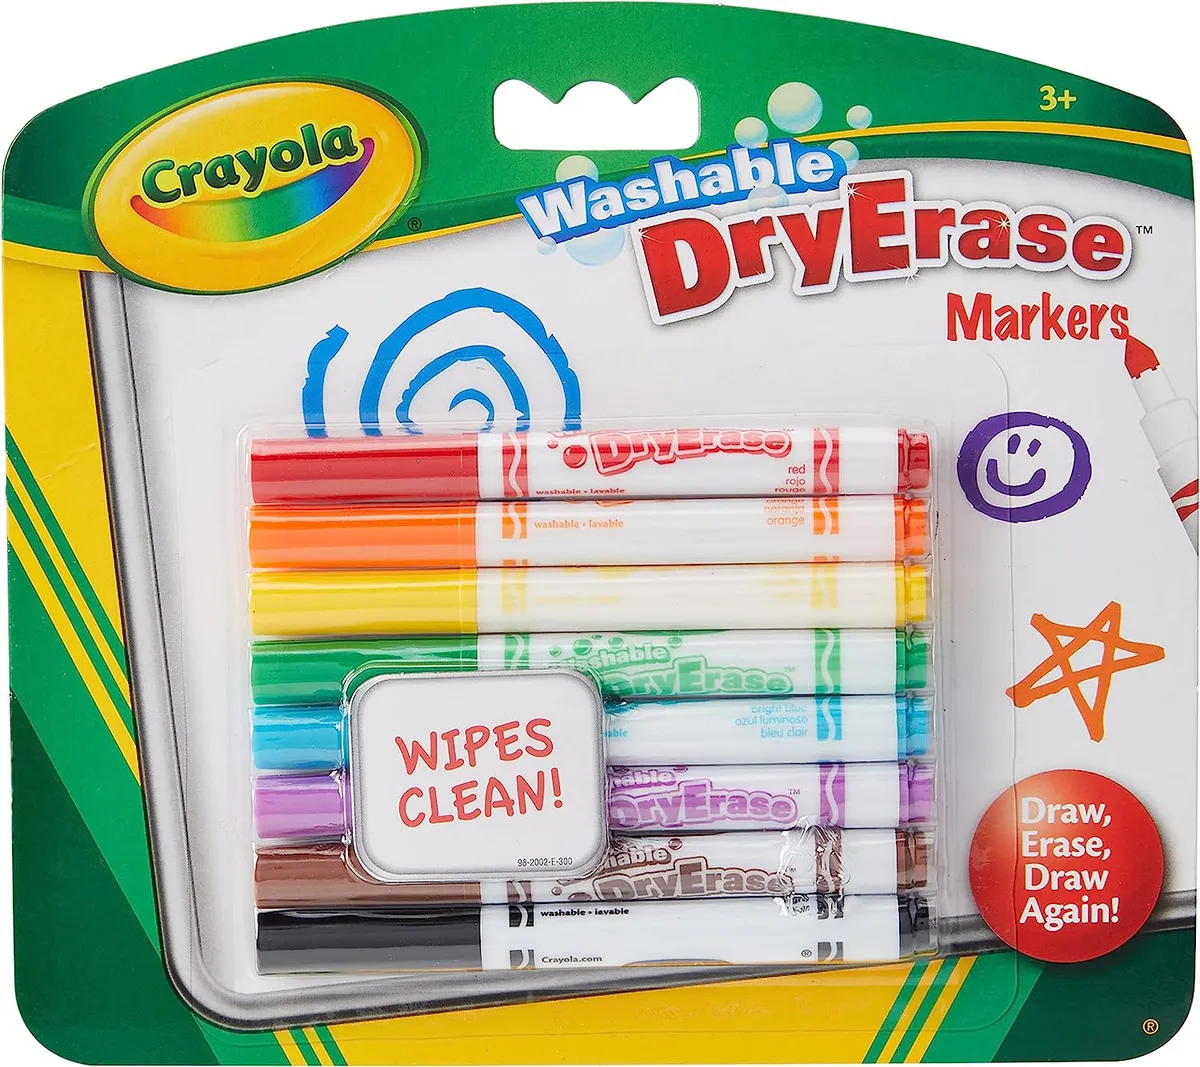 Crayola Washable Window Markers - 8 pieces, 1 set